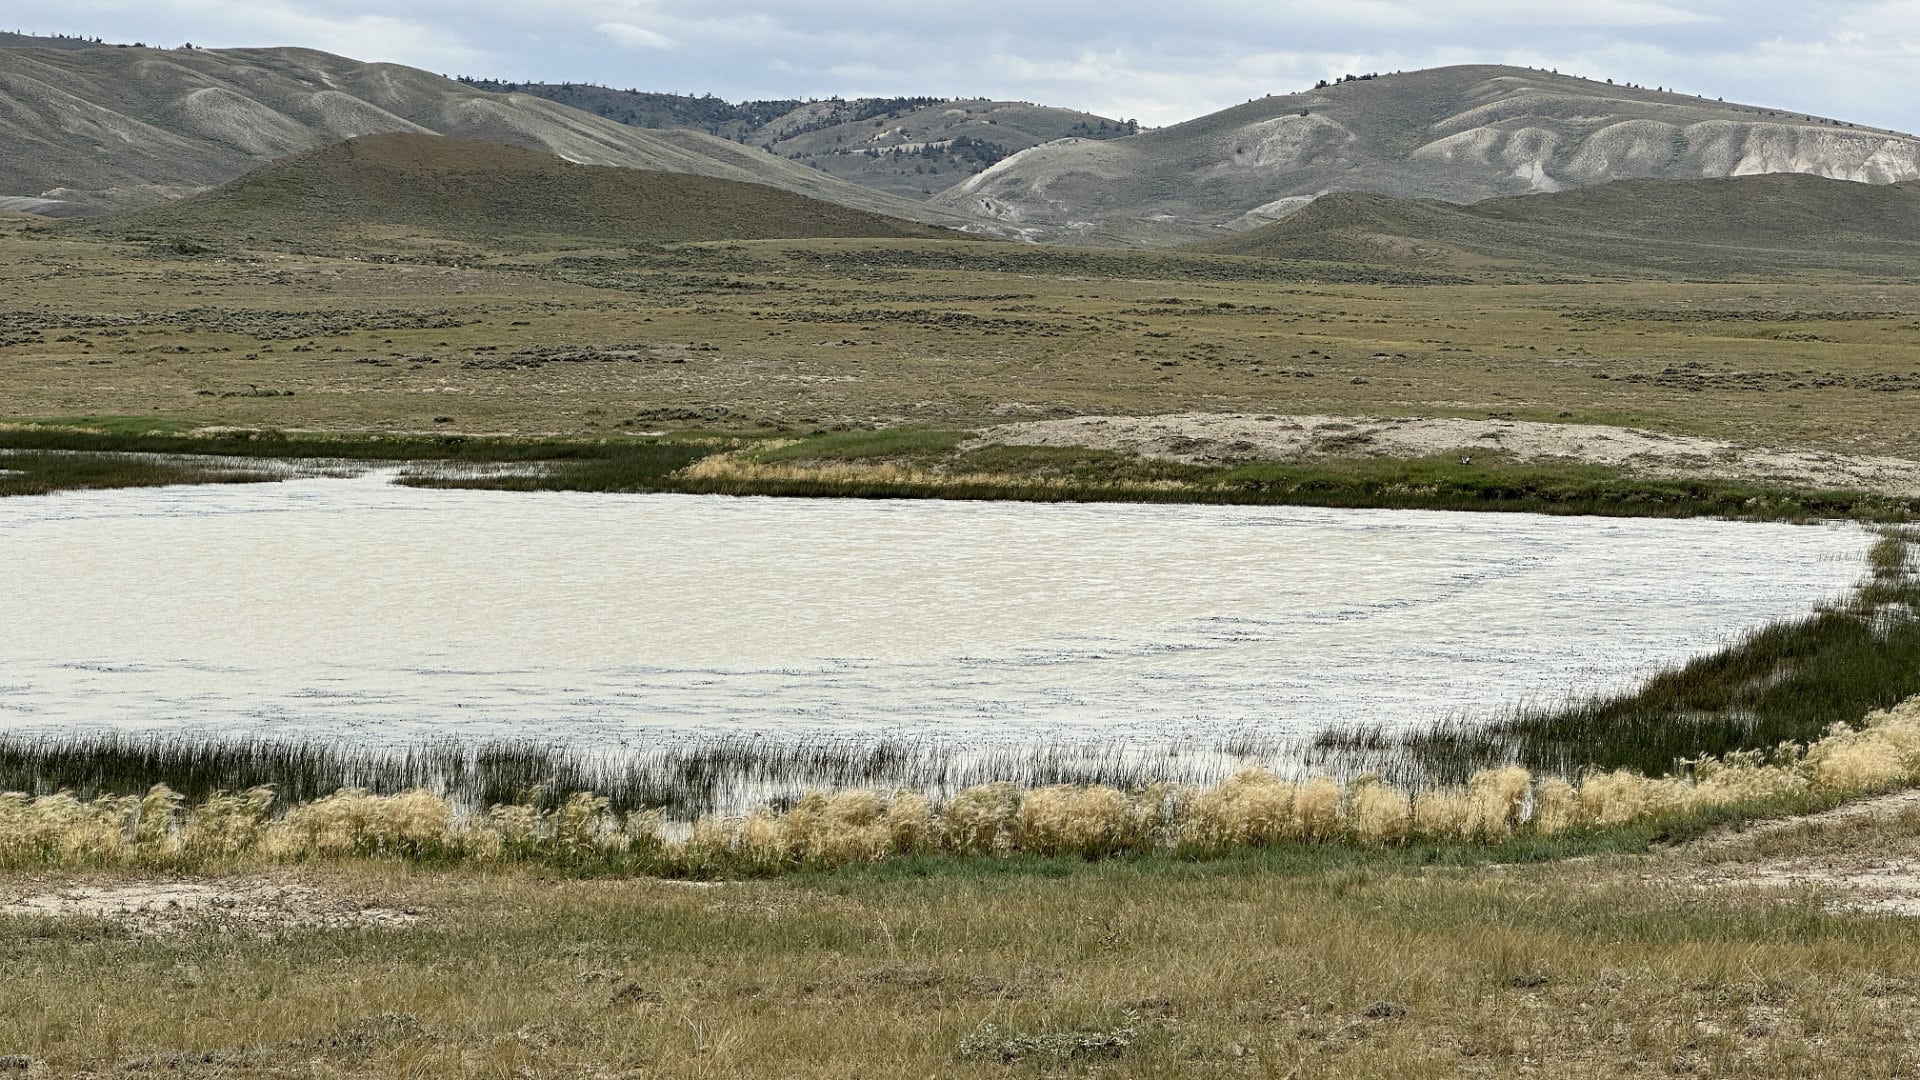 ervay basin grass ranch water feature 2